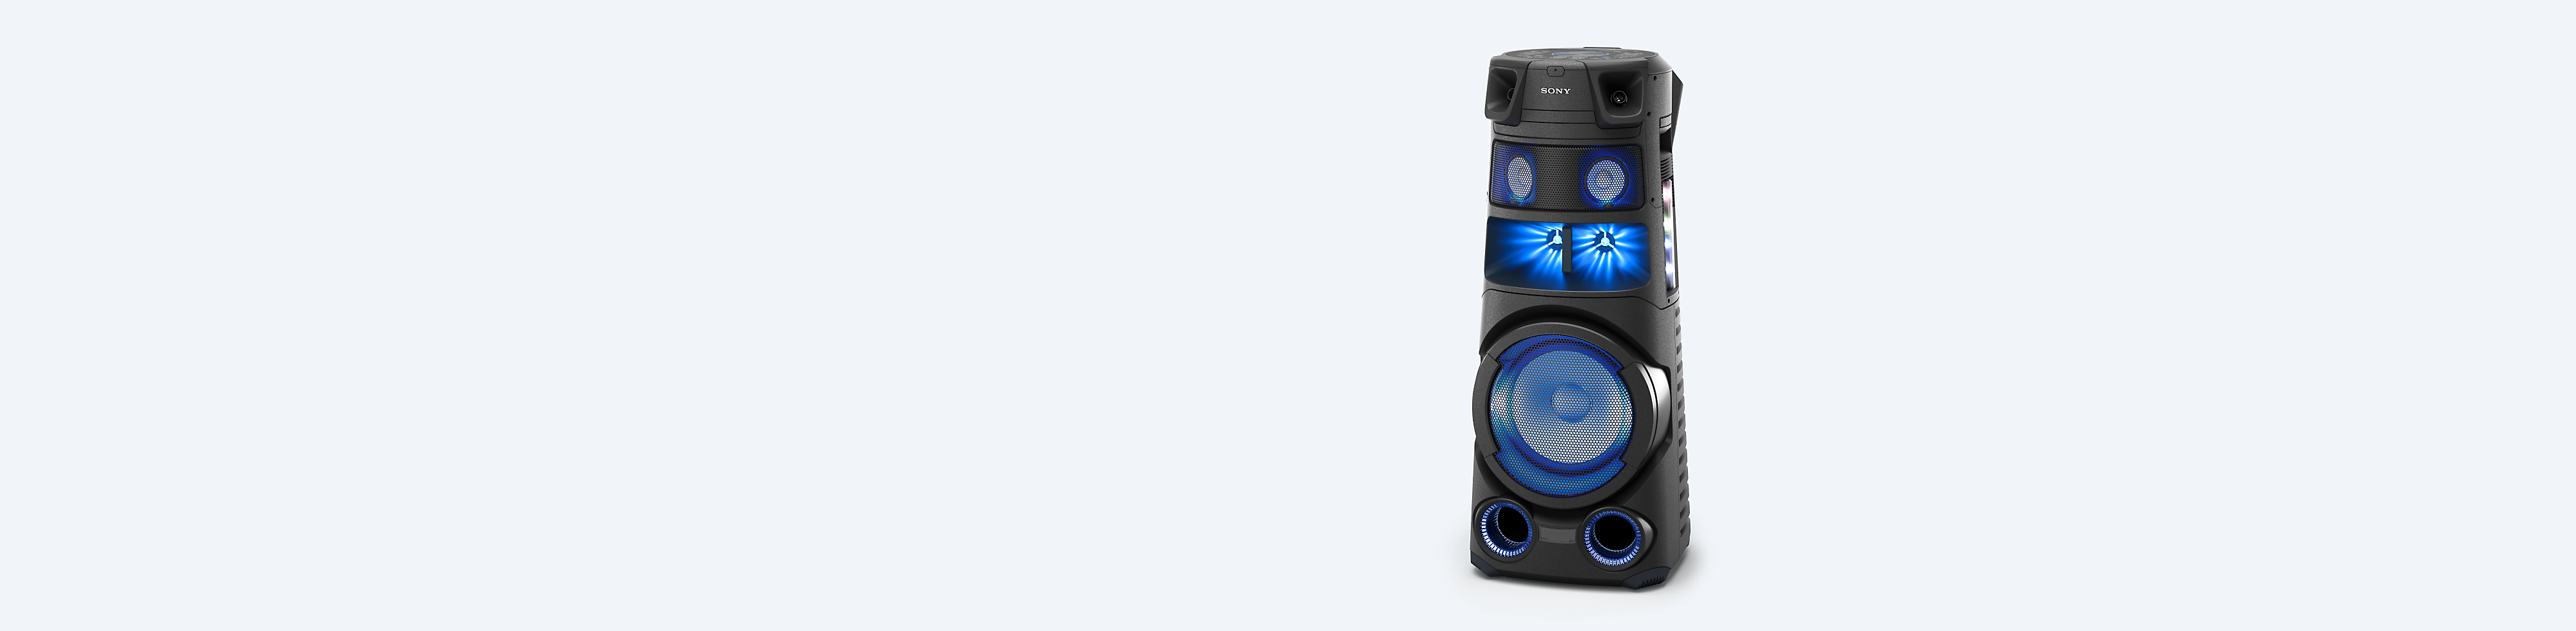 Vysoce výkonné zvukové systémy Sony na modrém pozadí